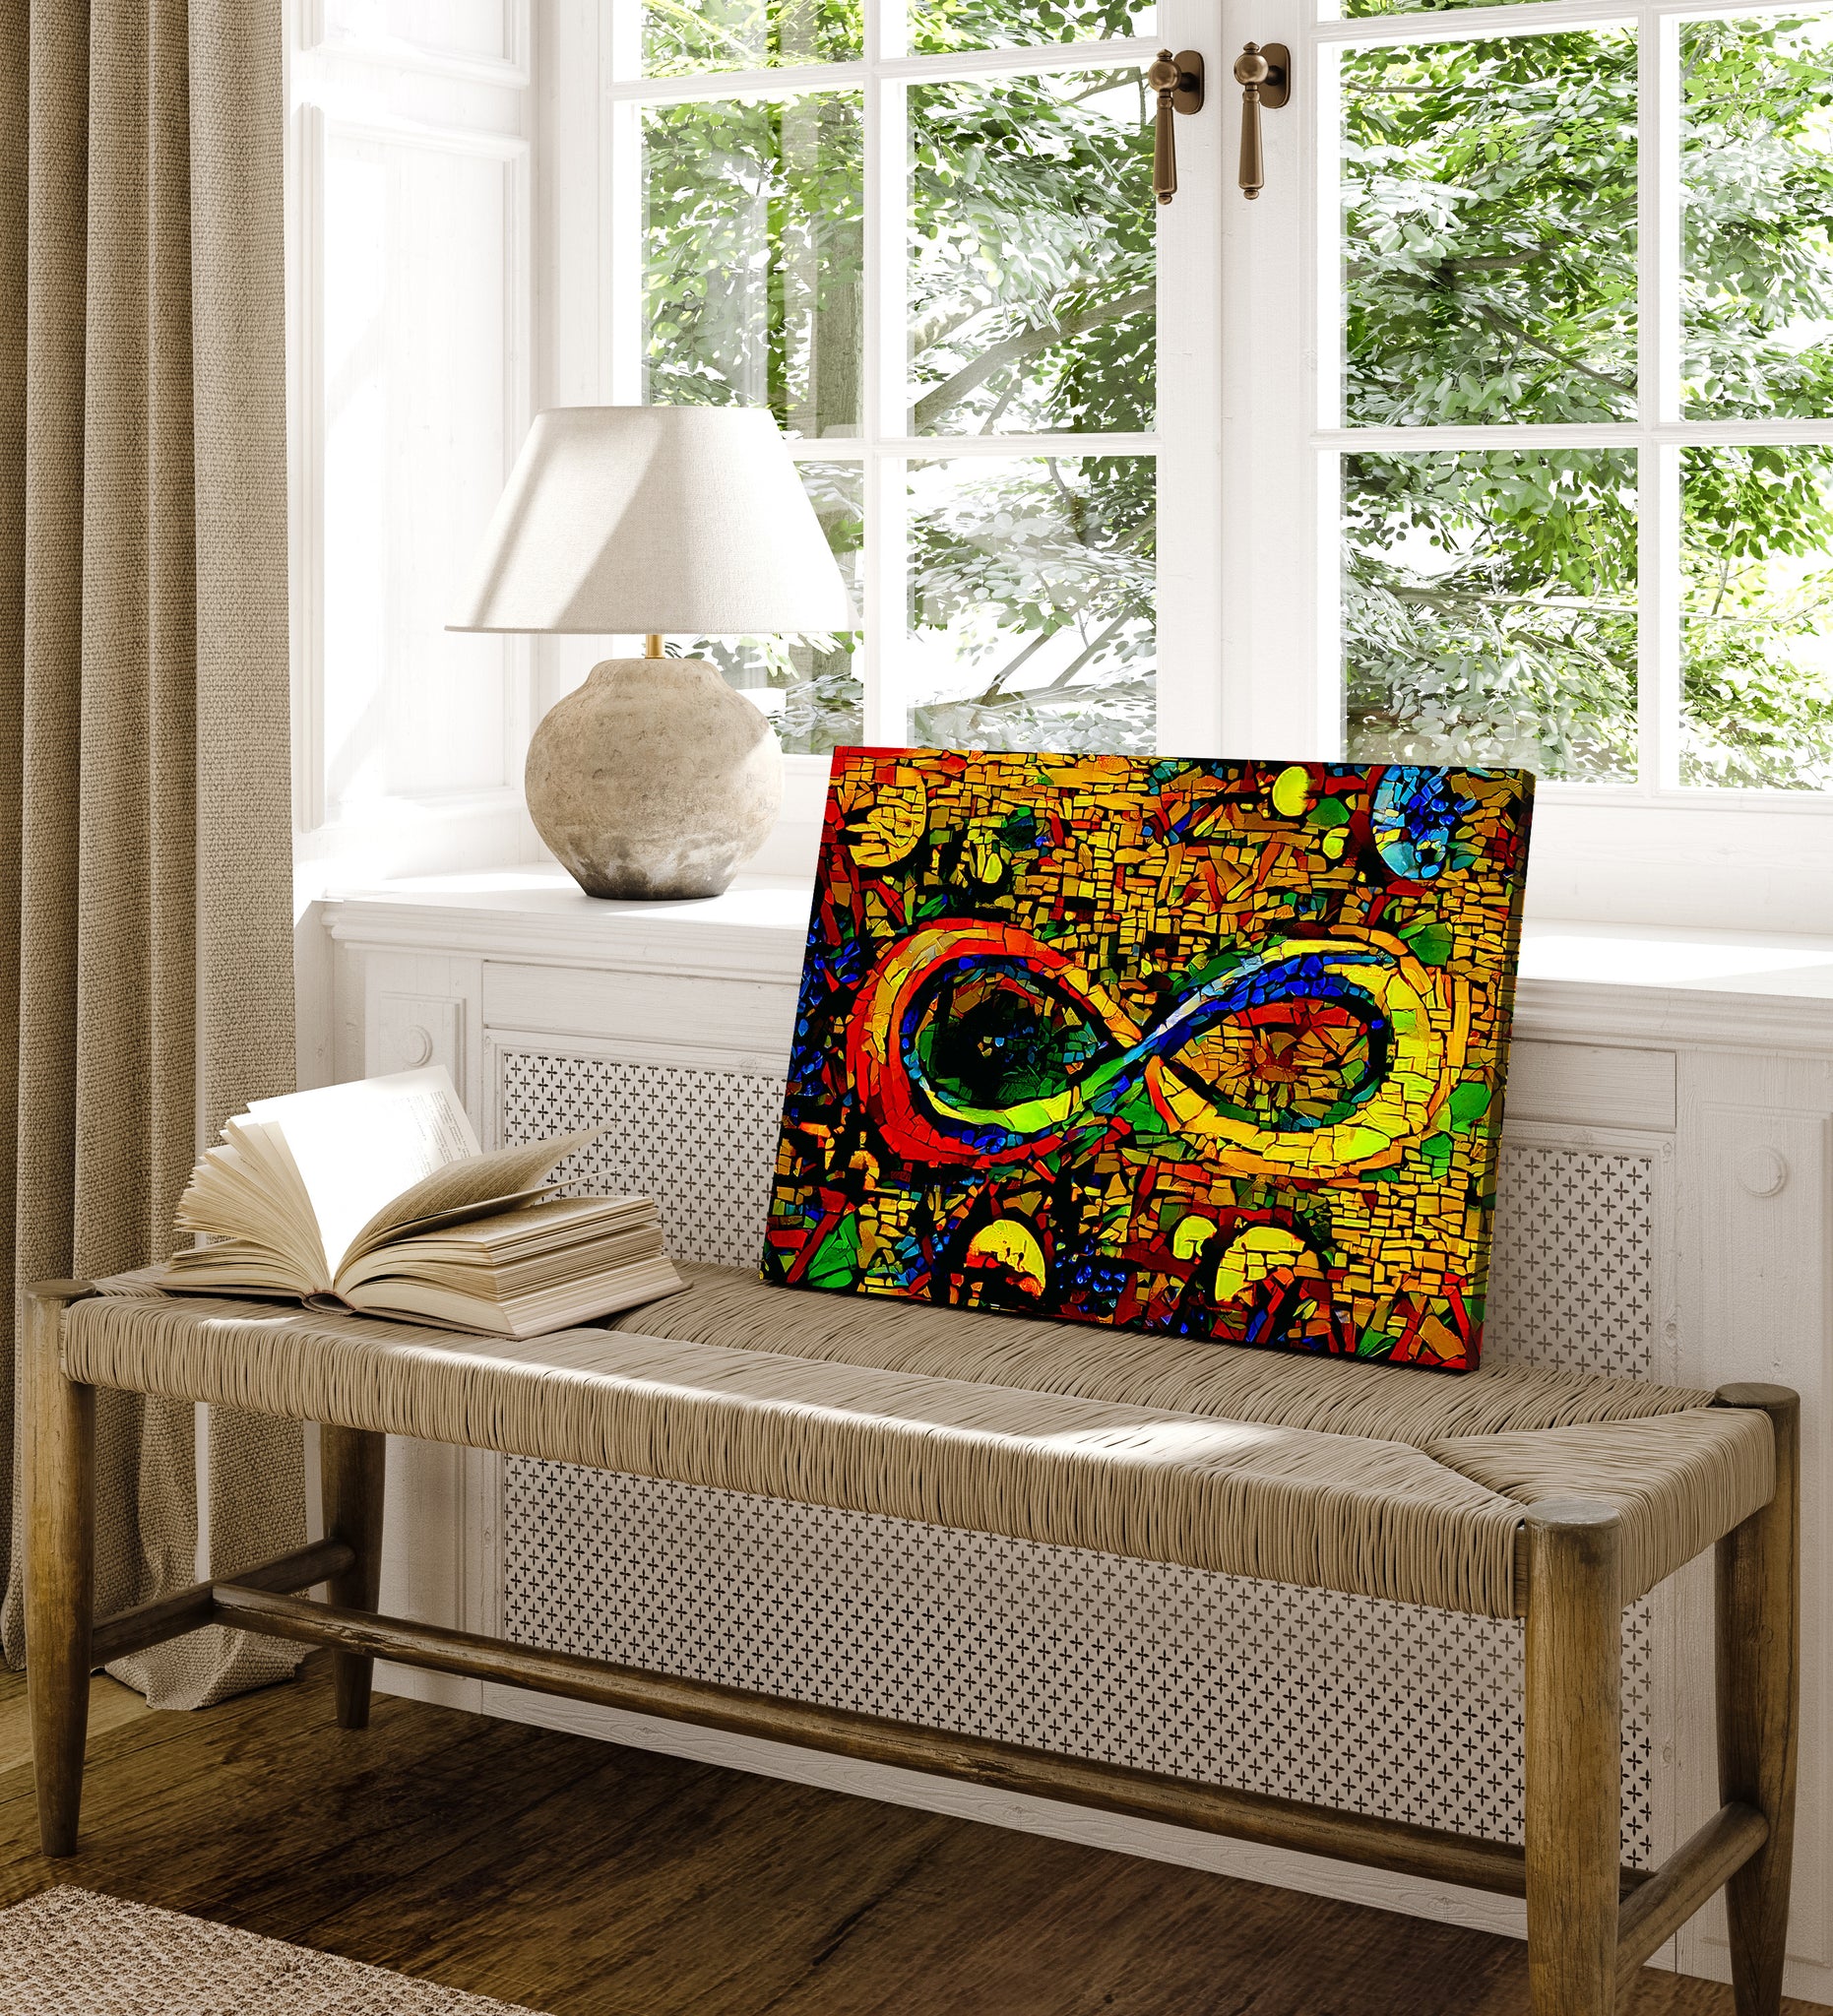 Infinite Galaxy's Mosaic Infinity Window Painting, Infinity Wall Art, Canvas Art, Wall Decor, , Abstract, Digital Artwork